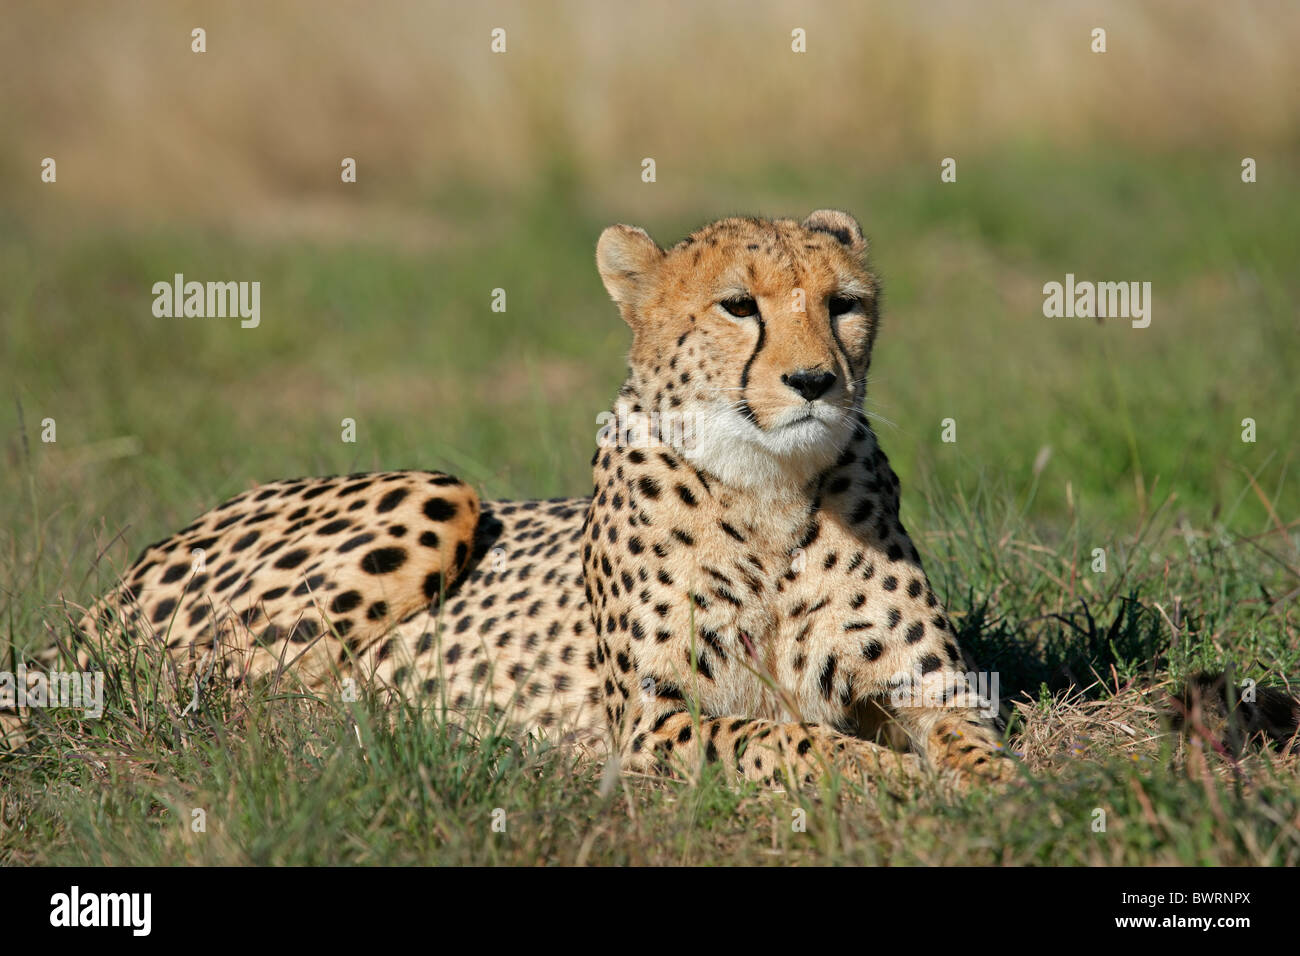 Cheetah (Acinonyx jubatus) lying in the grass, South Africa Stock Photo